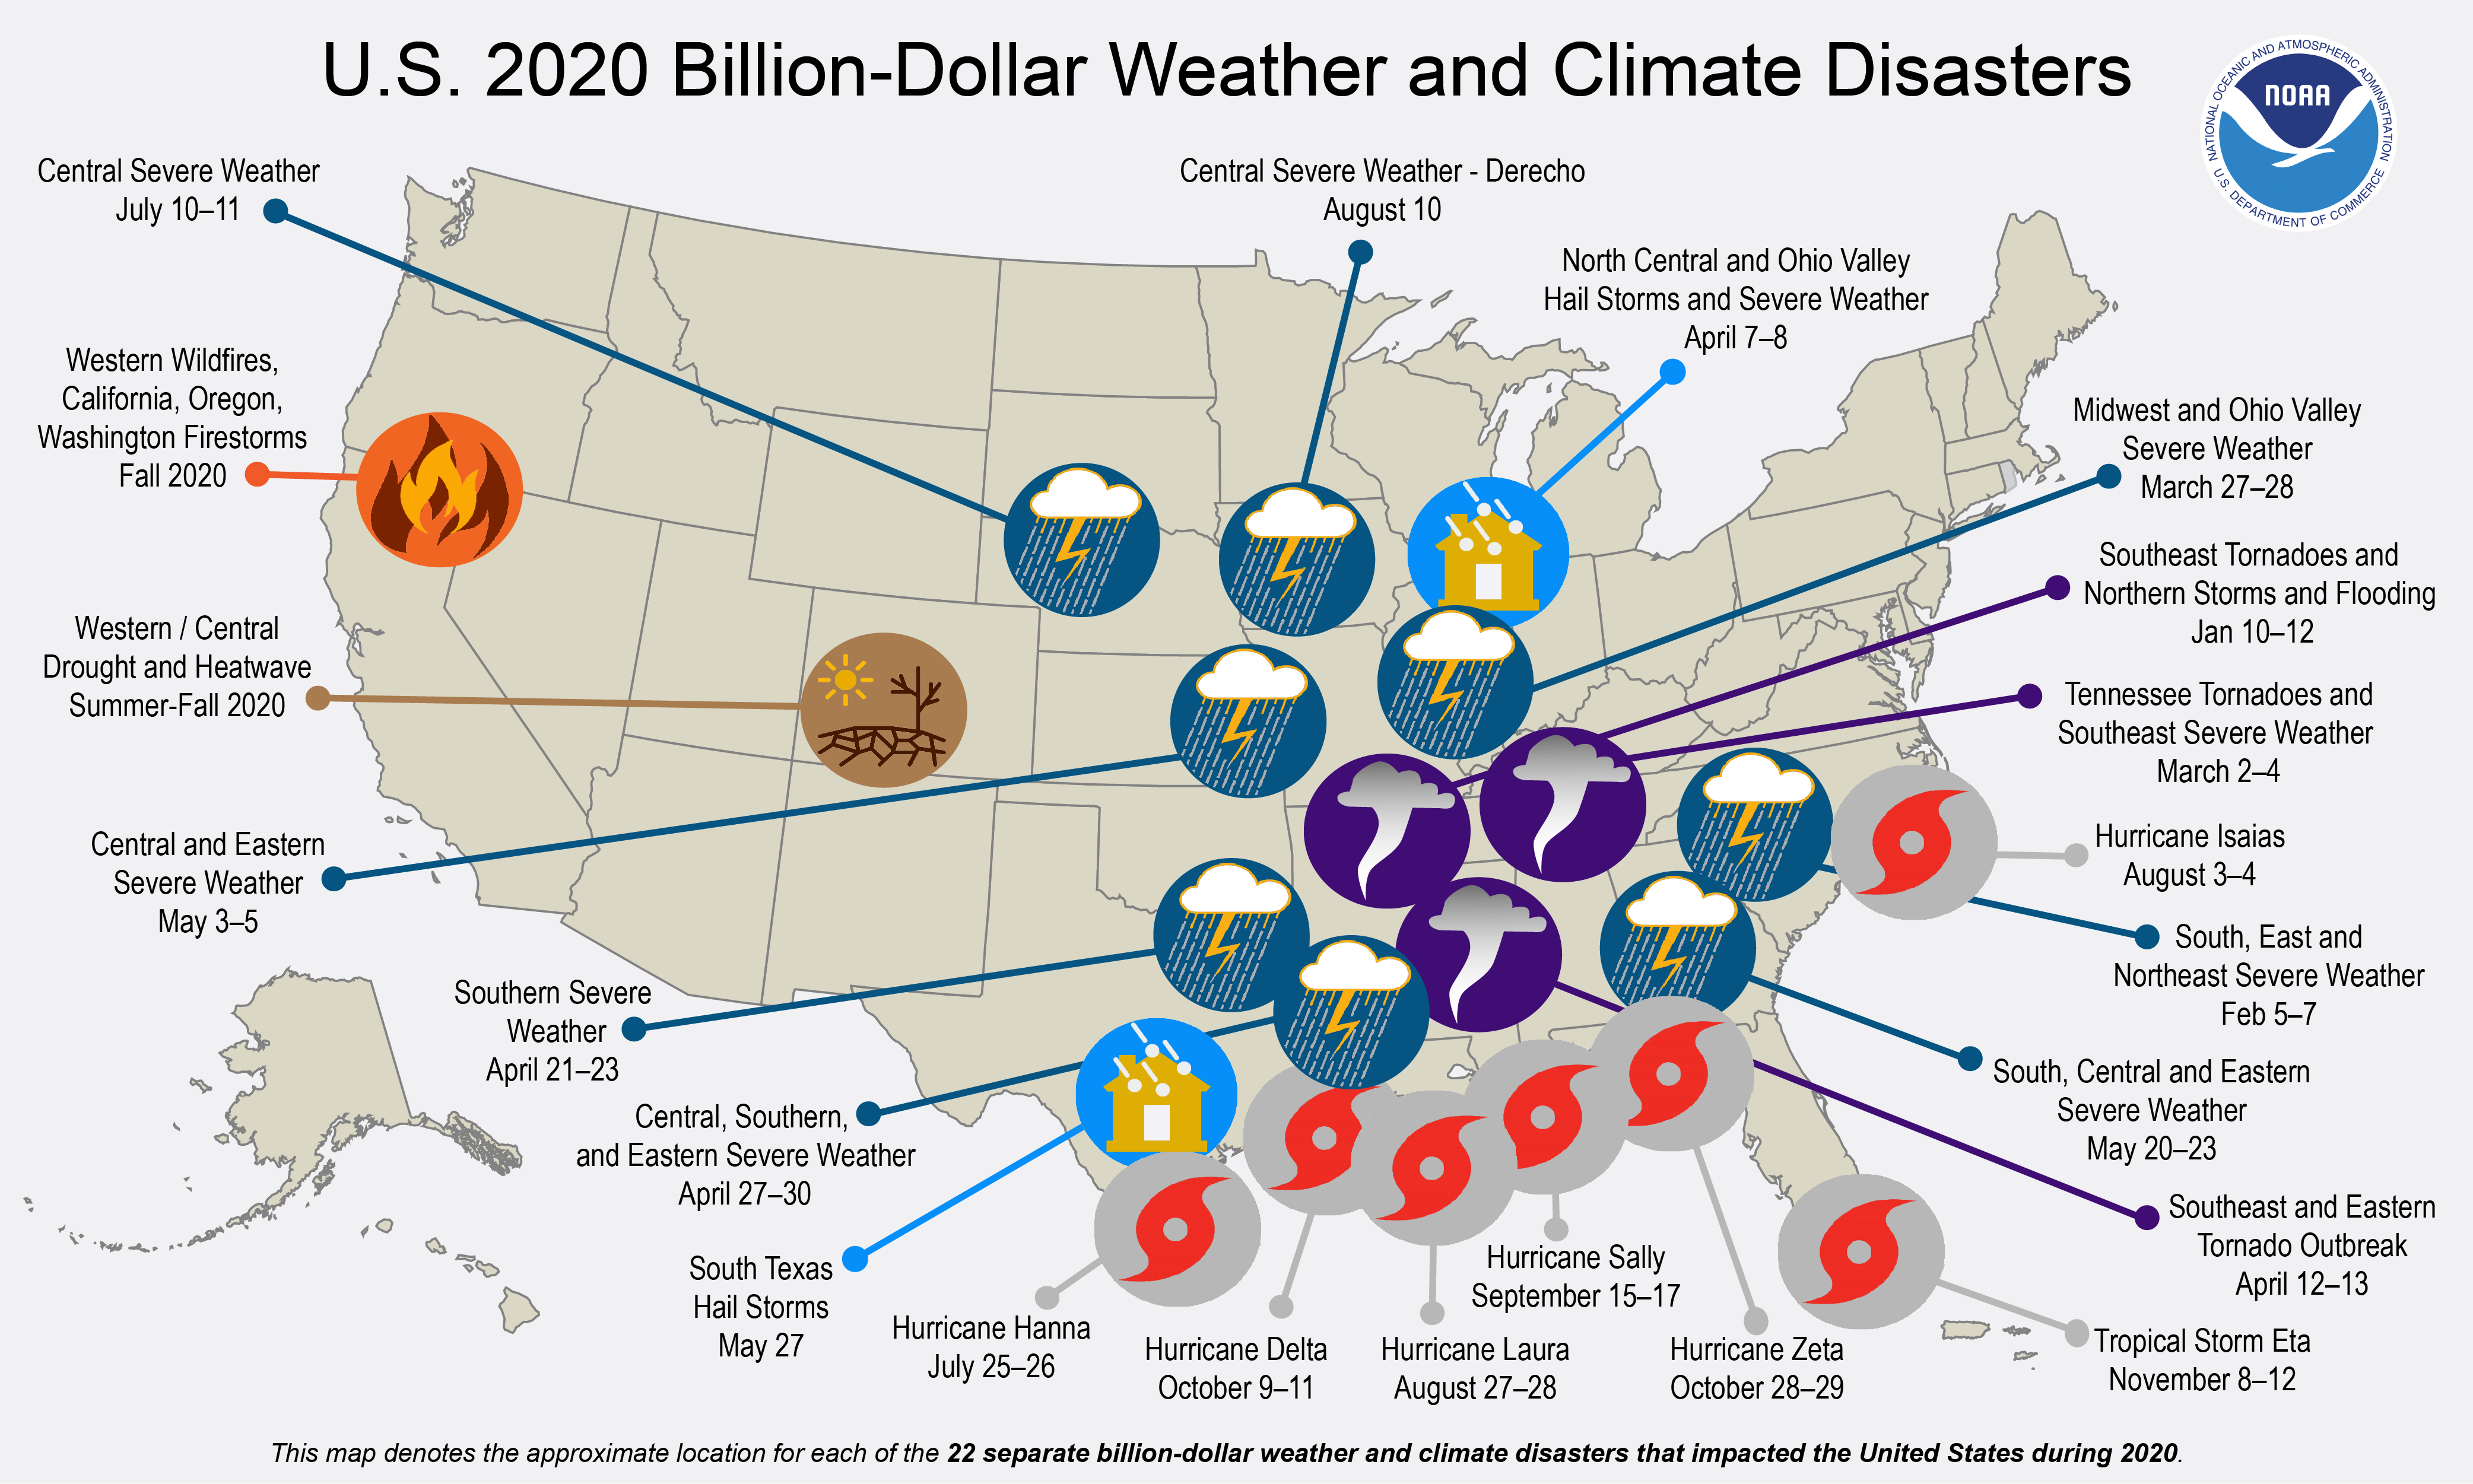 Record number of billiondollar disasters struck U.S. in 2020